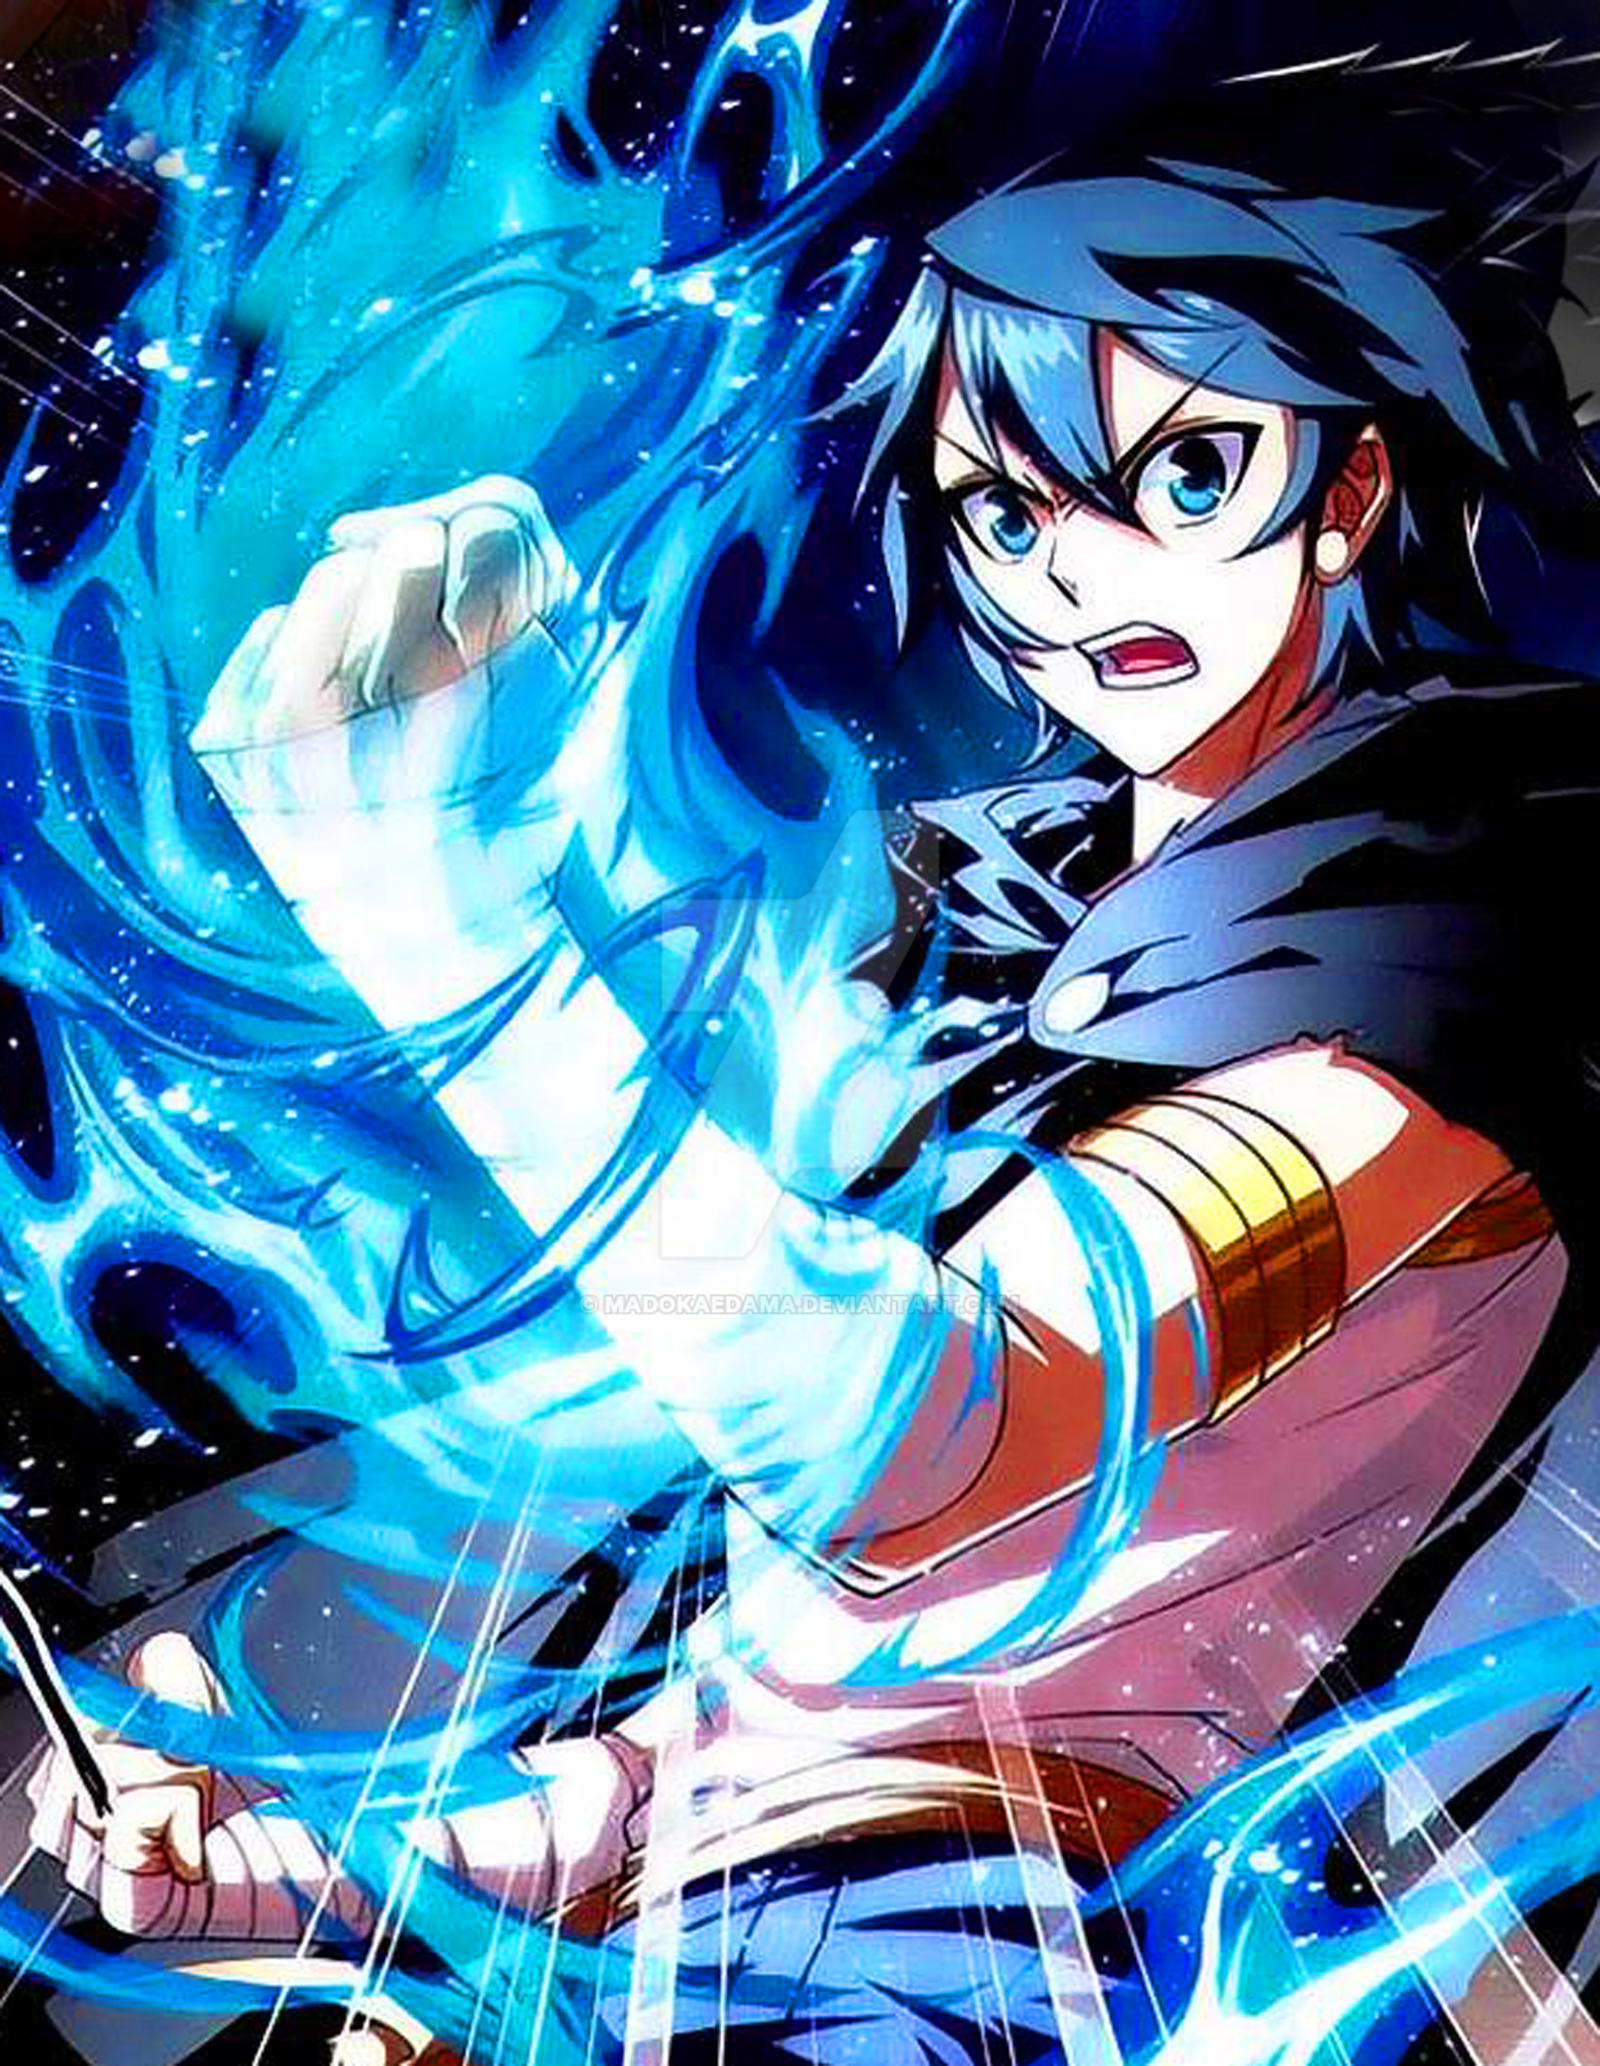 Xiao Yan and his Blue Geocentric Flame by madokaedama on DeviantArt